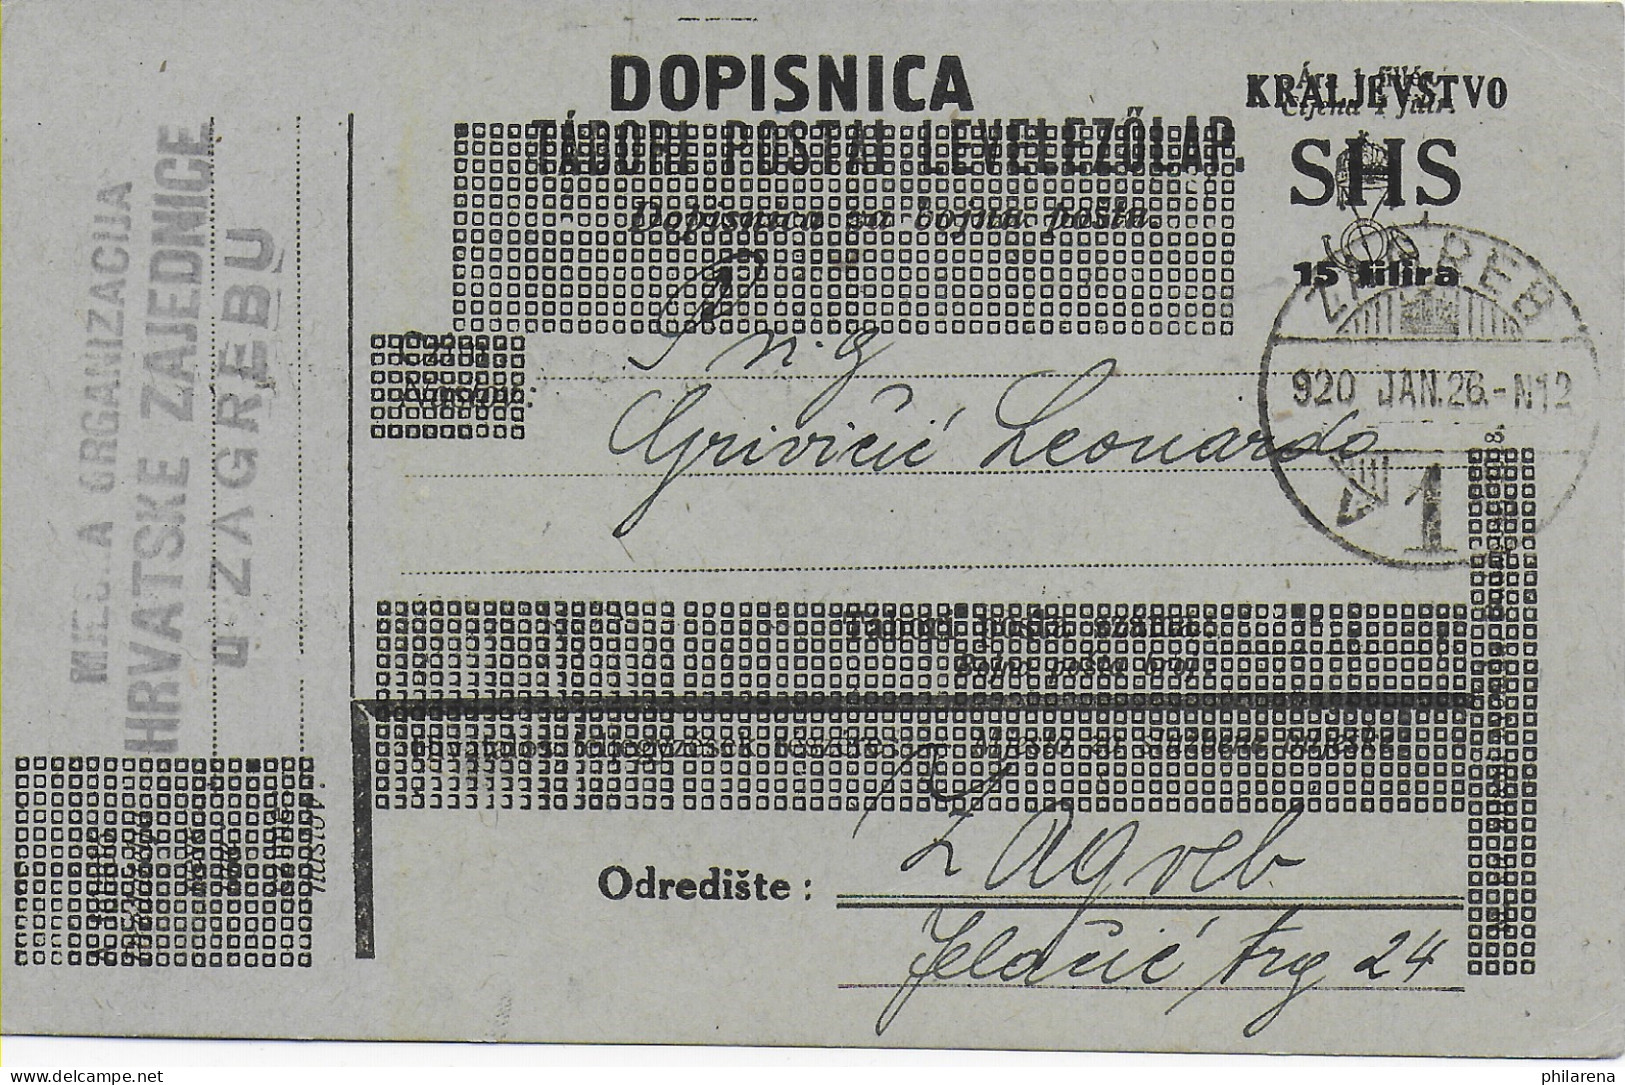 Postkarte Dopisnica Kralievstvo SHS Von Zagreb, 1926 - Croatia